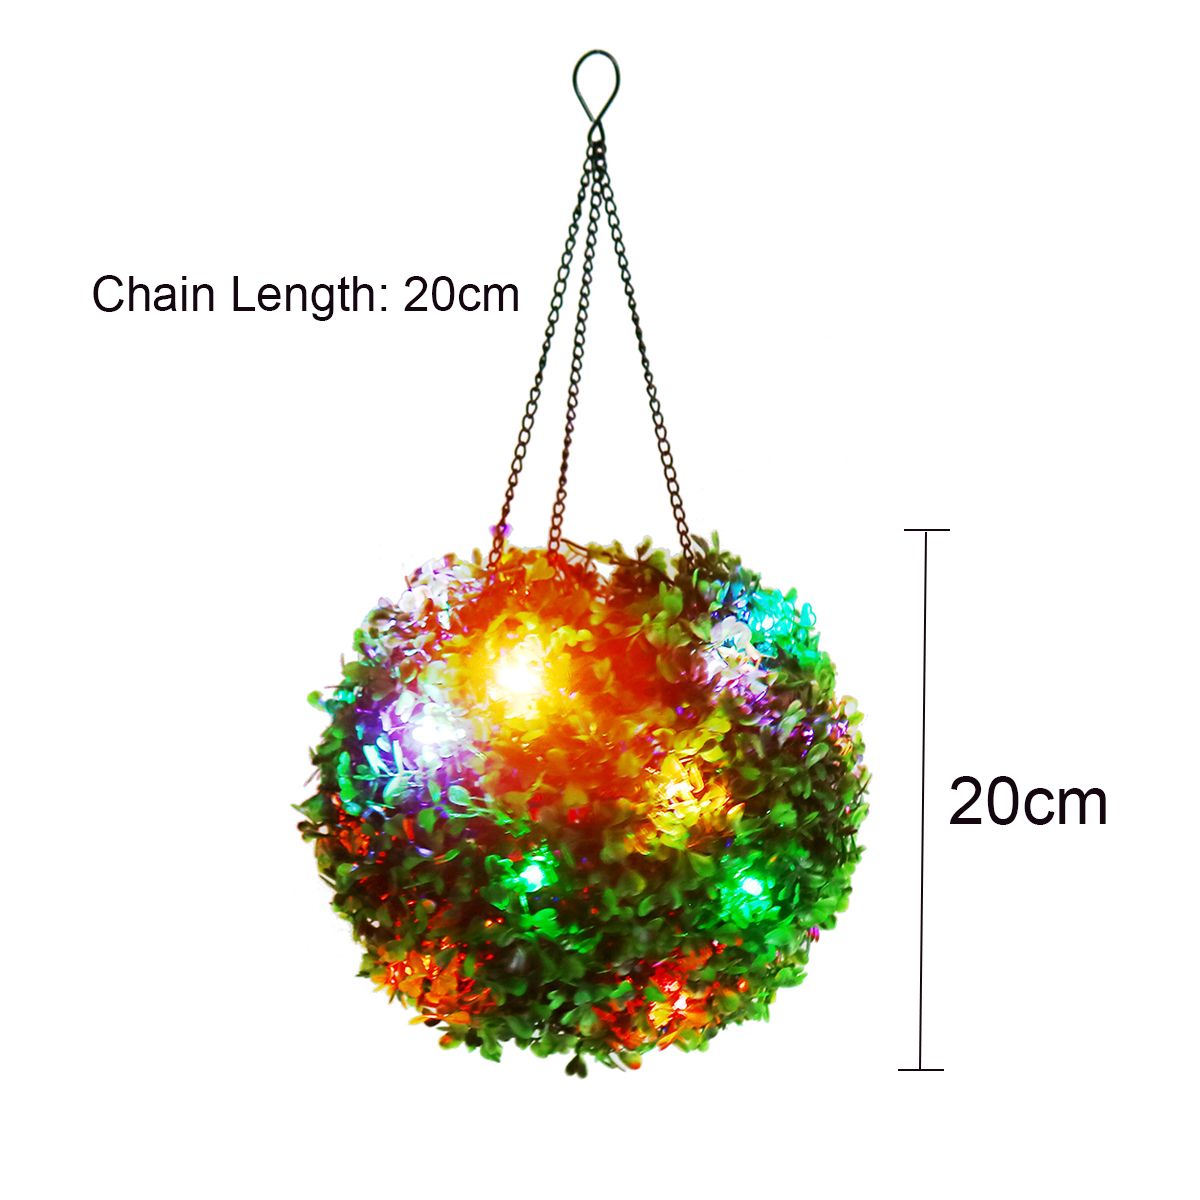 20cm-Diameter-Solar-Powered-Colorful-LED-Night-Light-Artificial-Topiary-Ball-Outdoor-Wedding-Garden--1579272